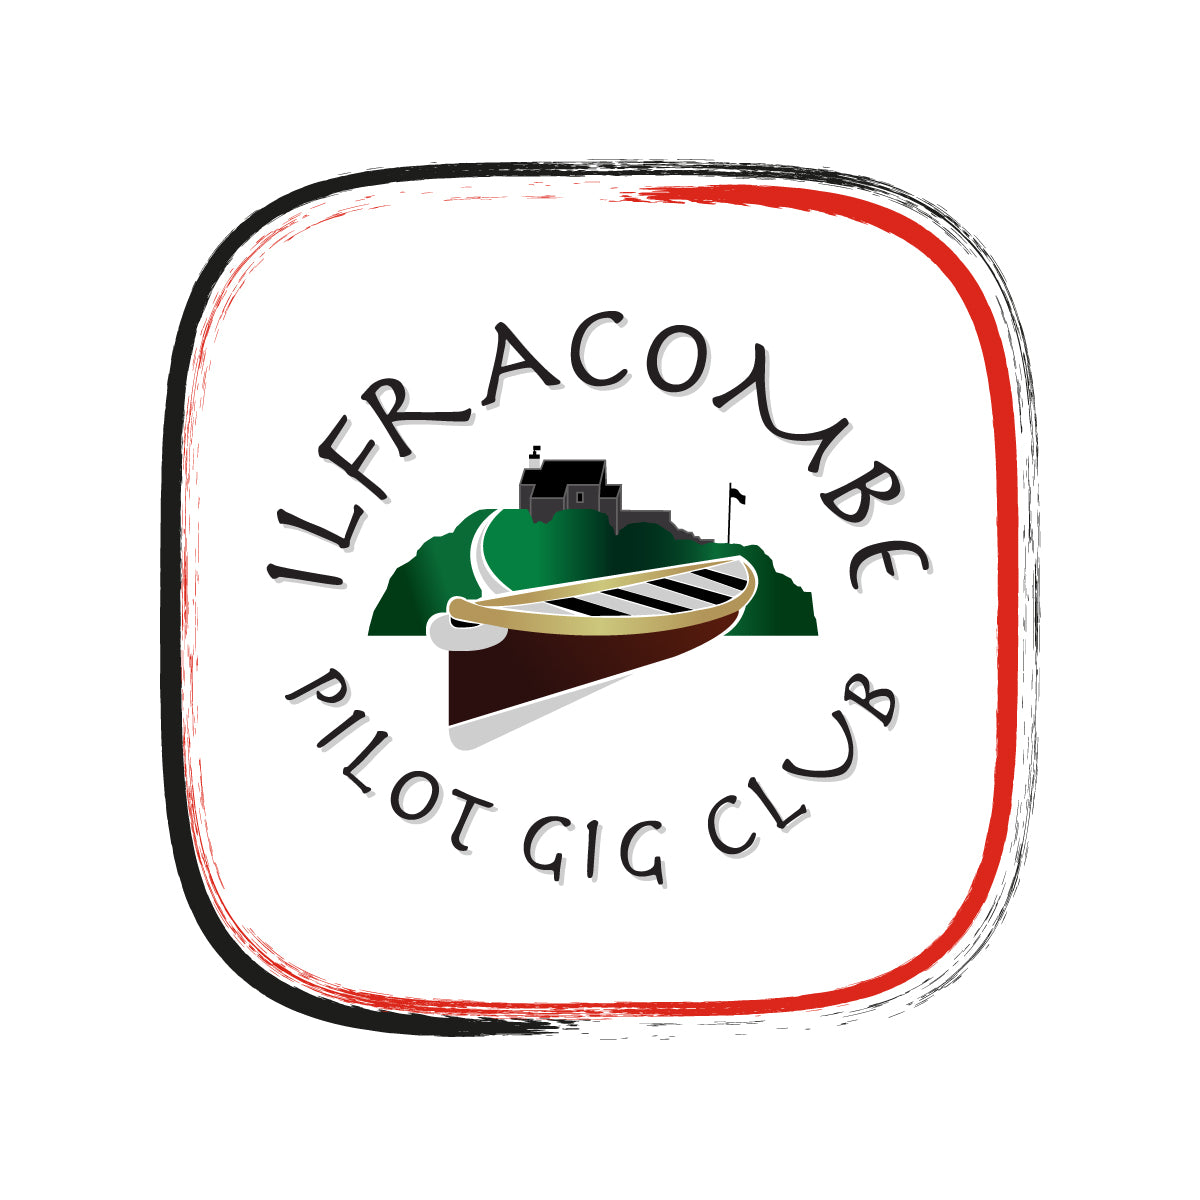 Ilfracombe Gig Club